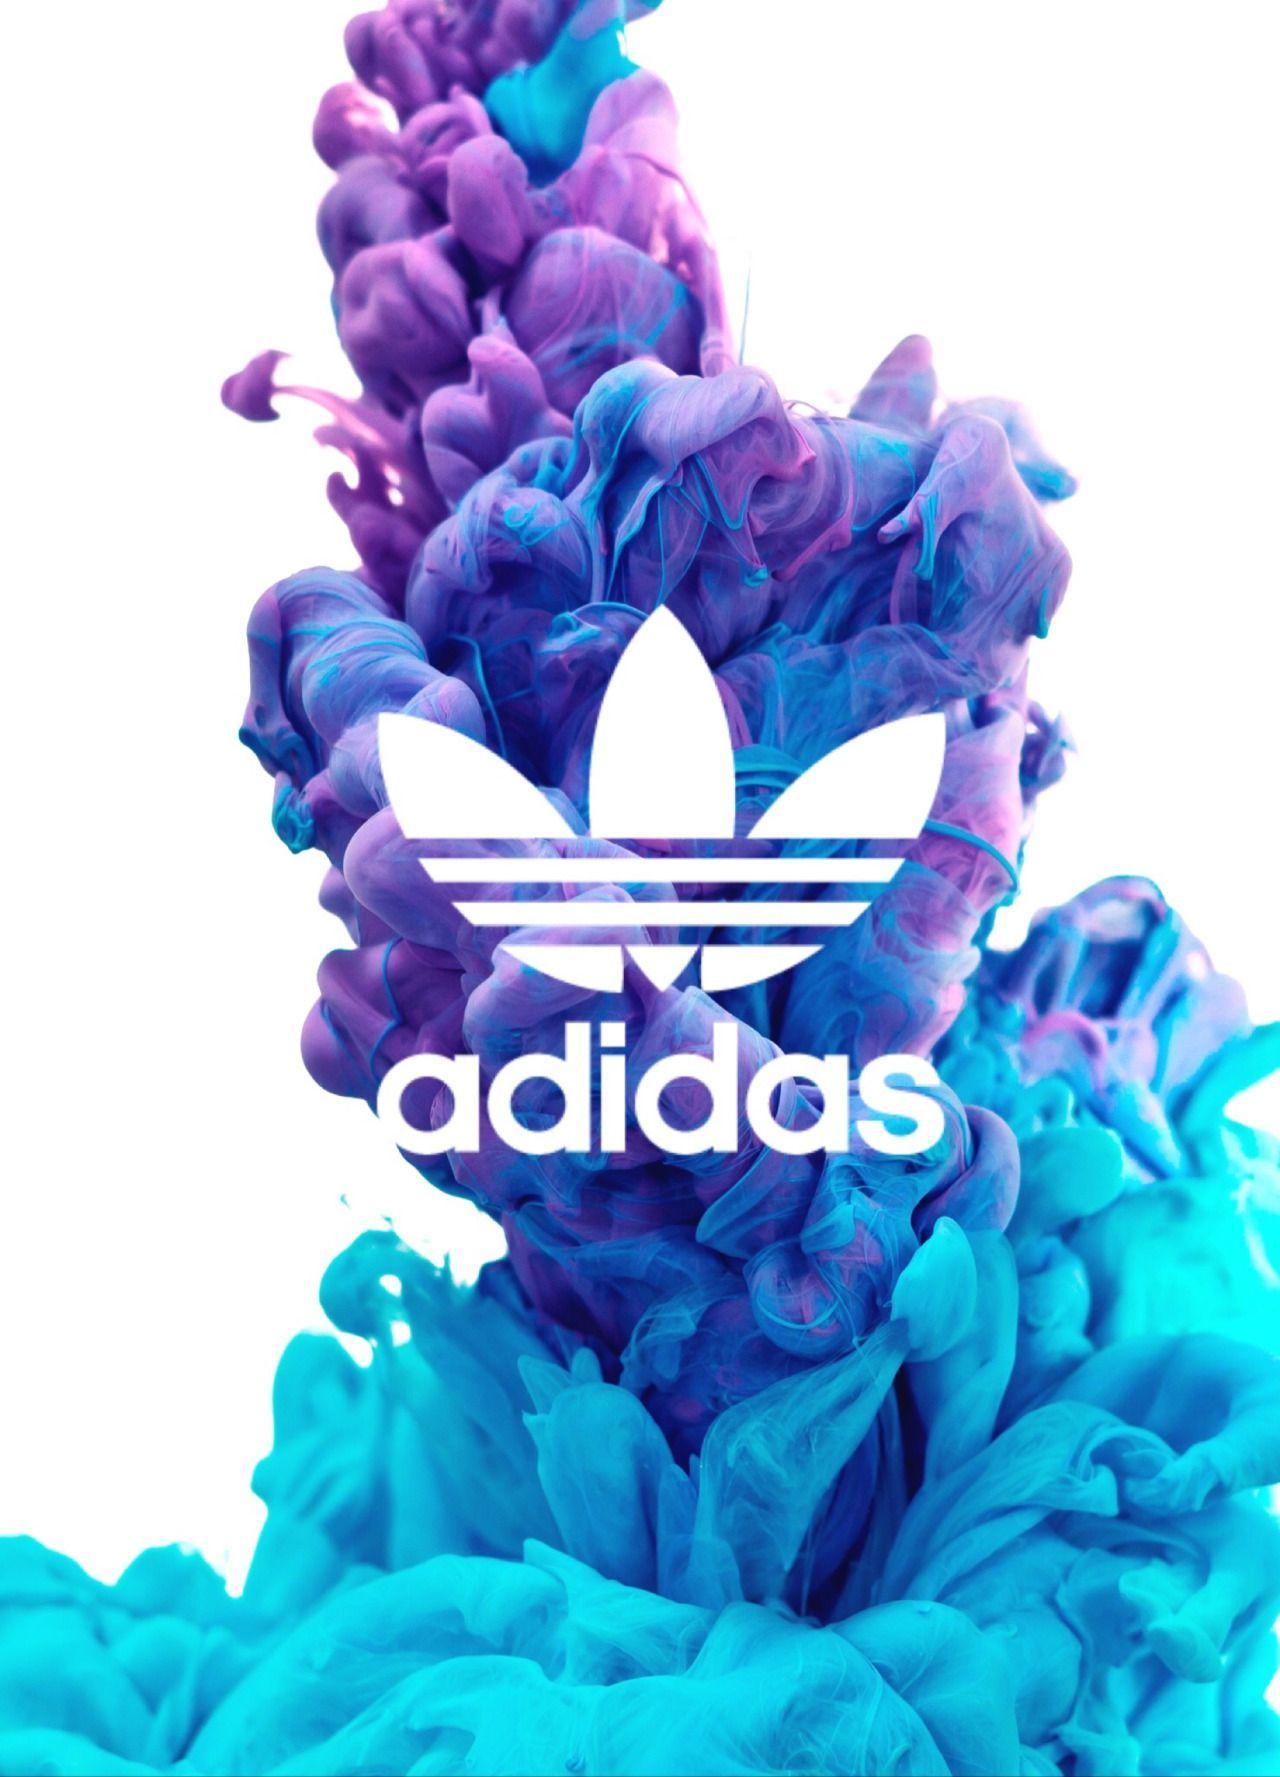 adidas live wallpaper iphone x